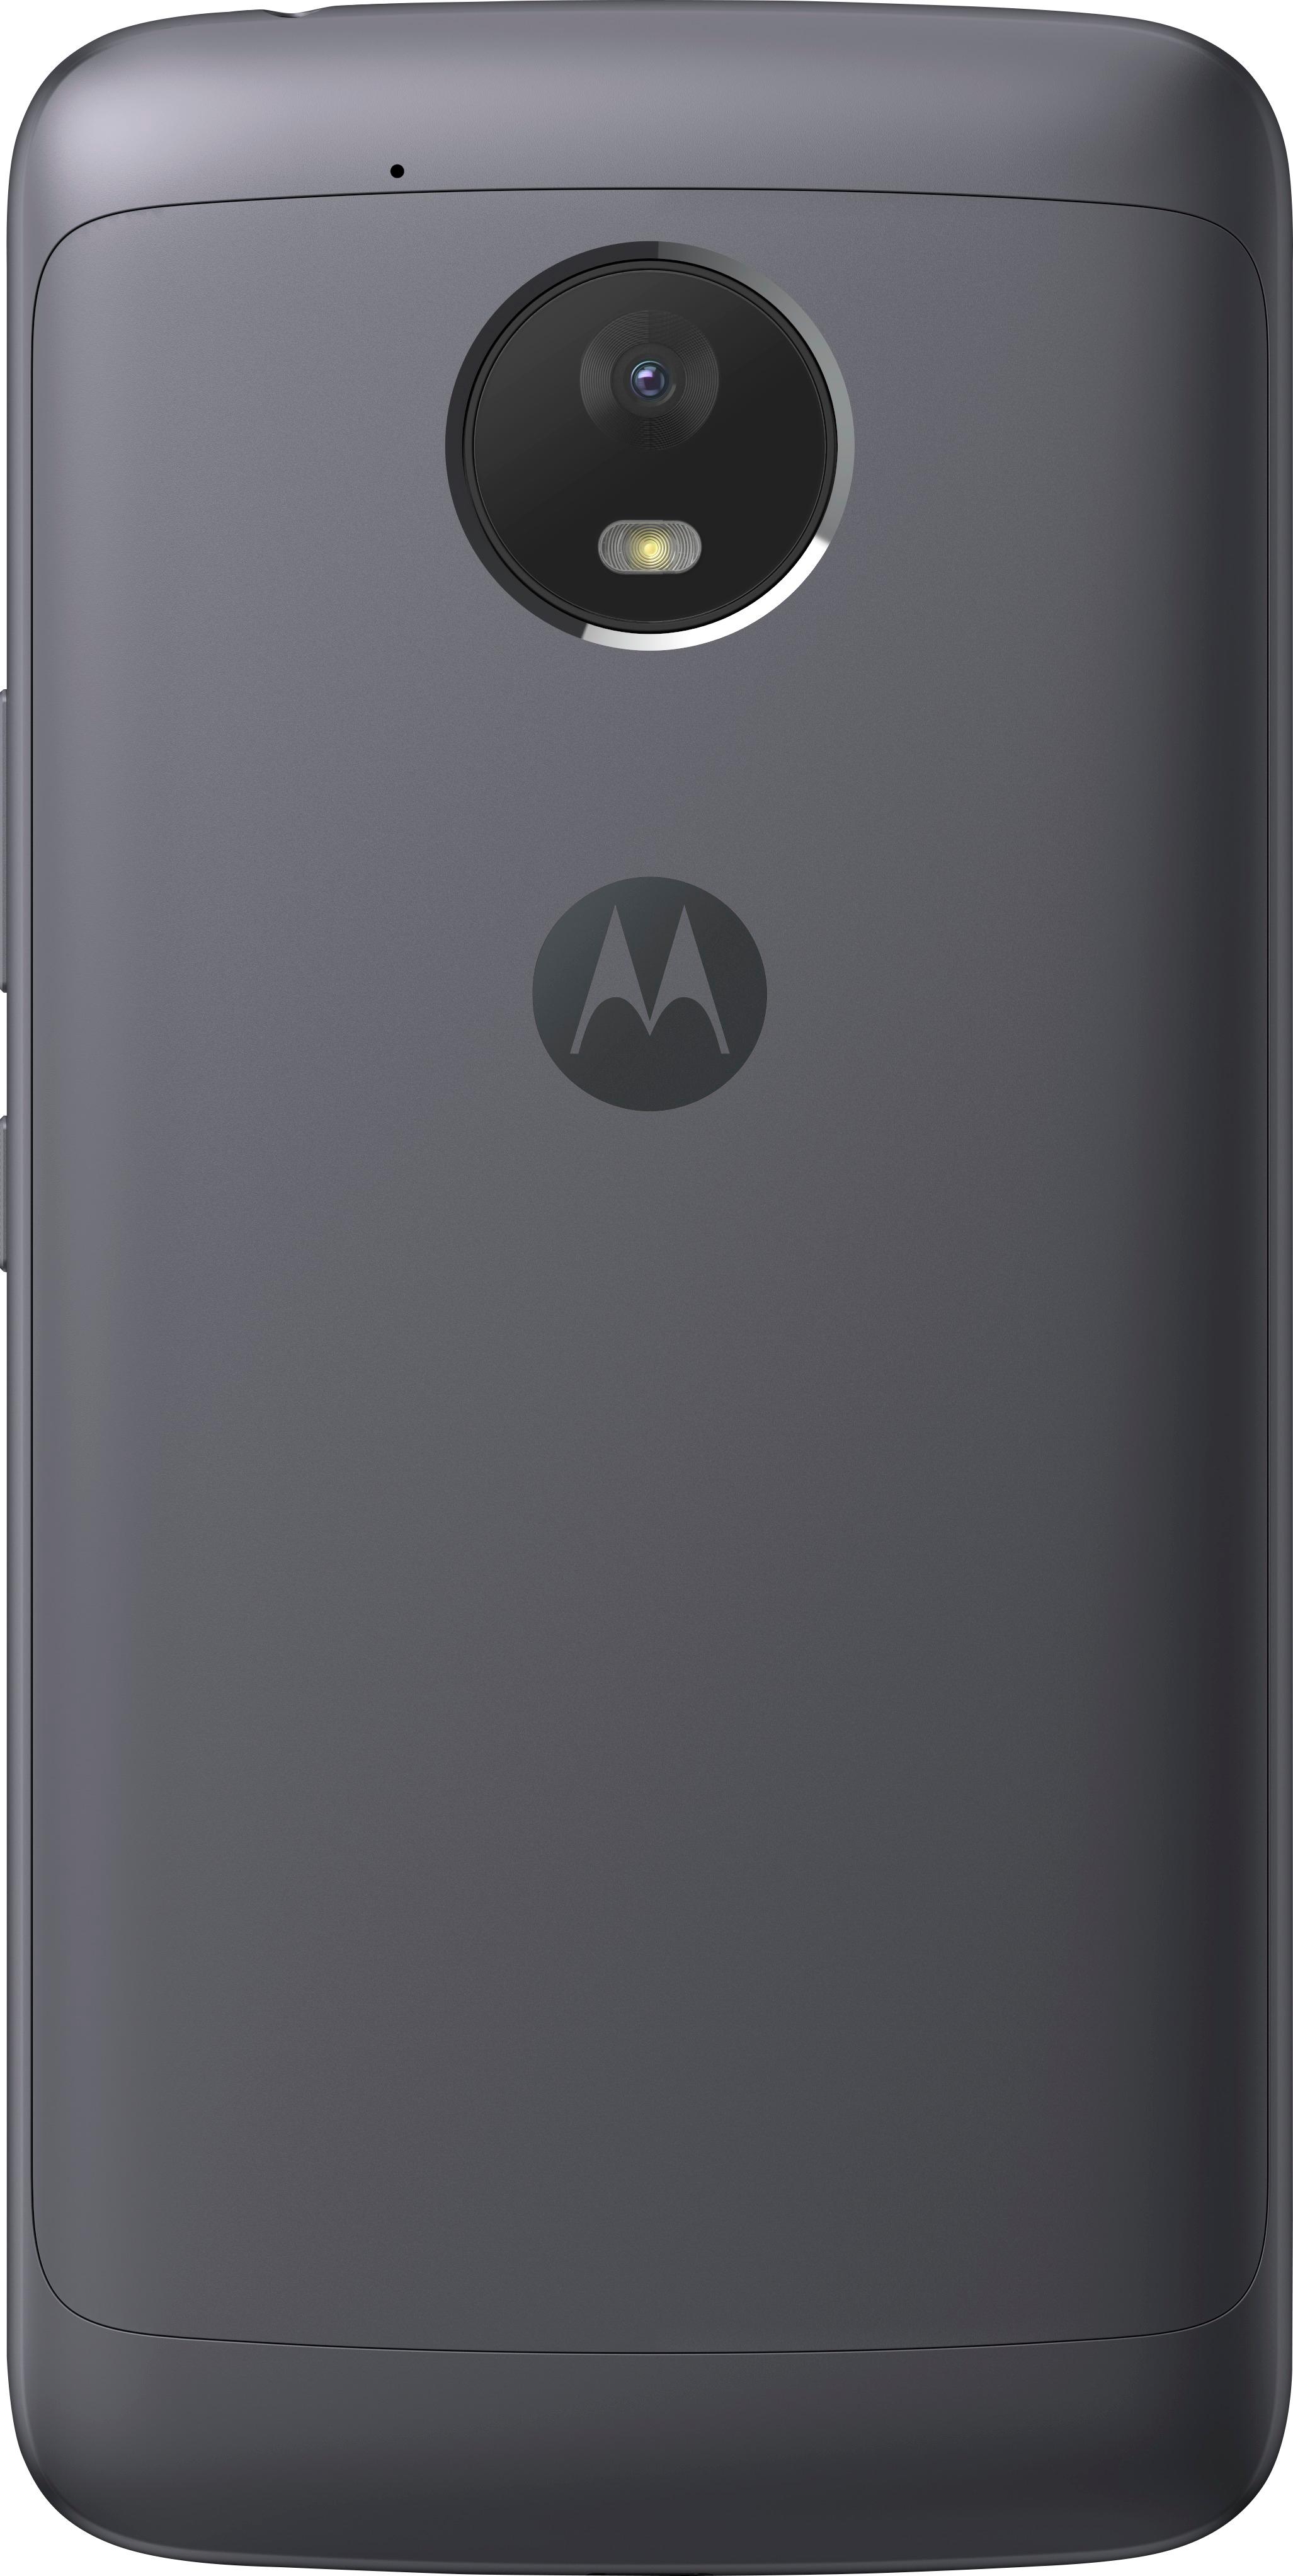 Motorola Moto E4 Plus - Specs